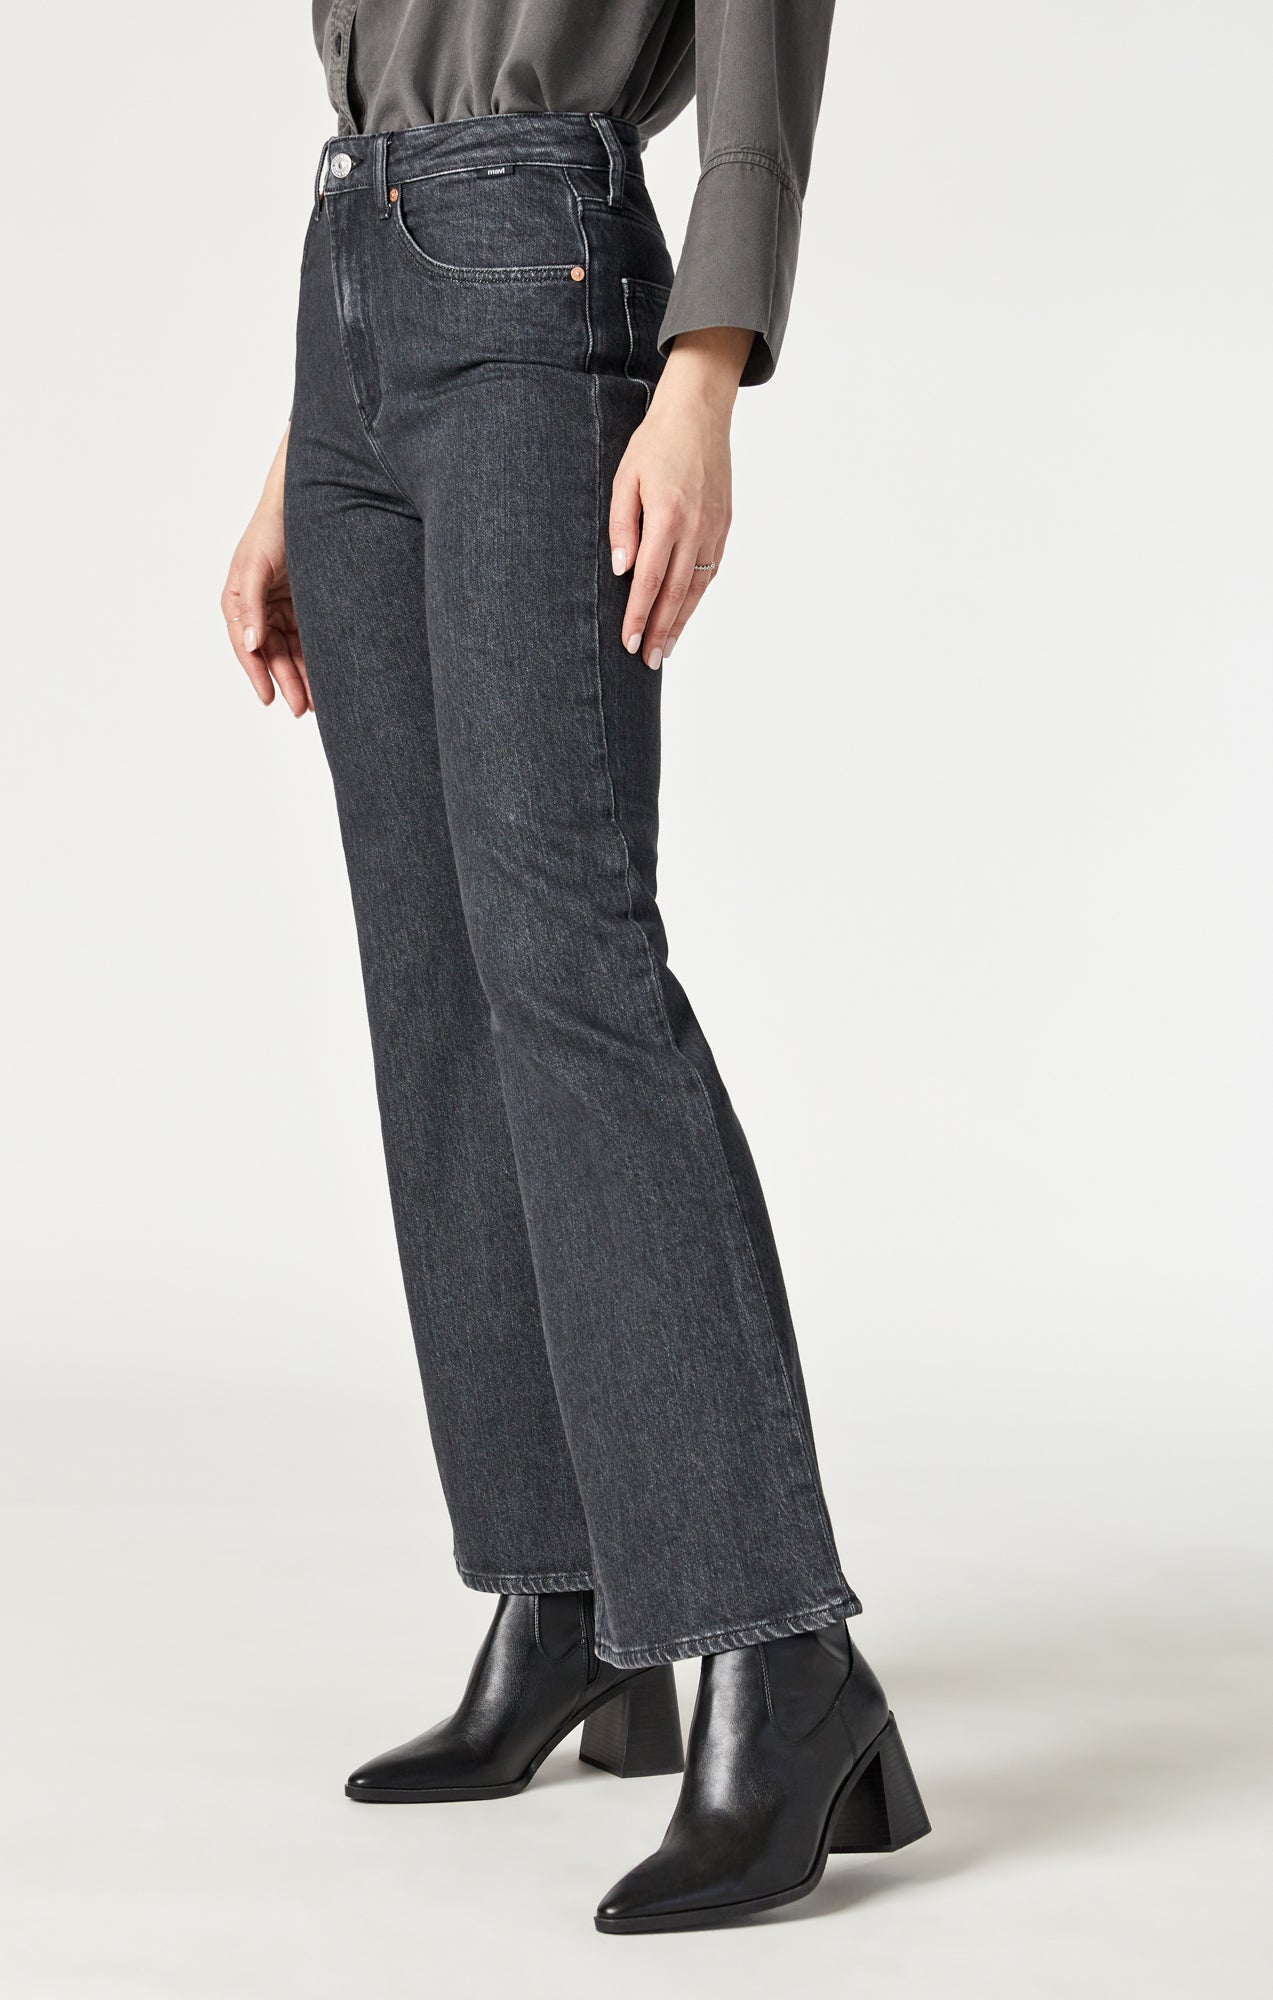 Sexy bootcut jeans flare pants 5-pocket denim stretch blue belt XS S M L XL